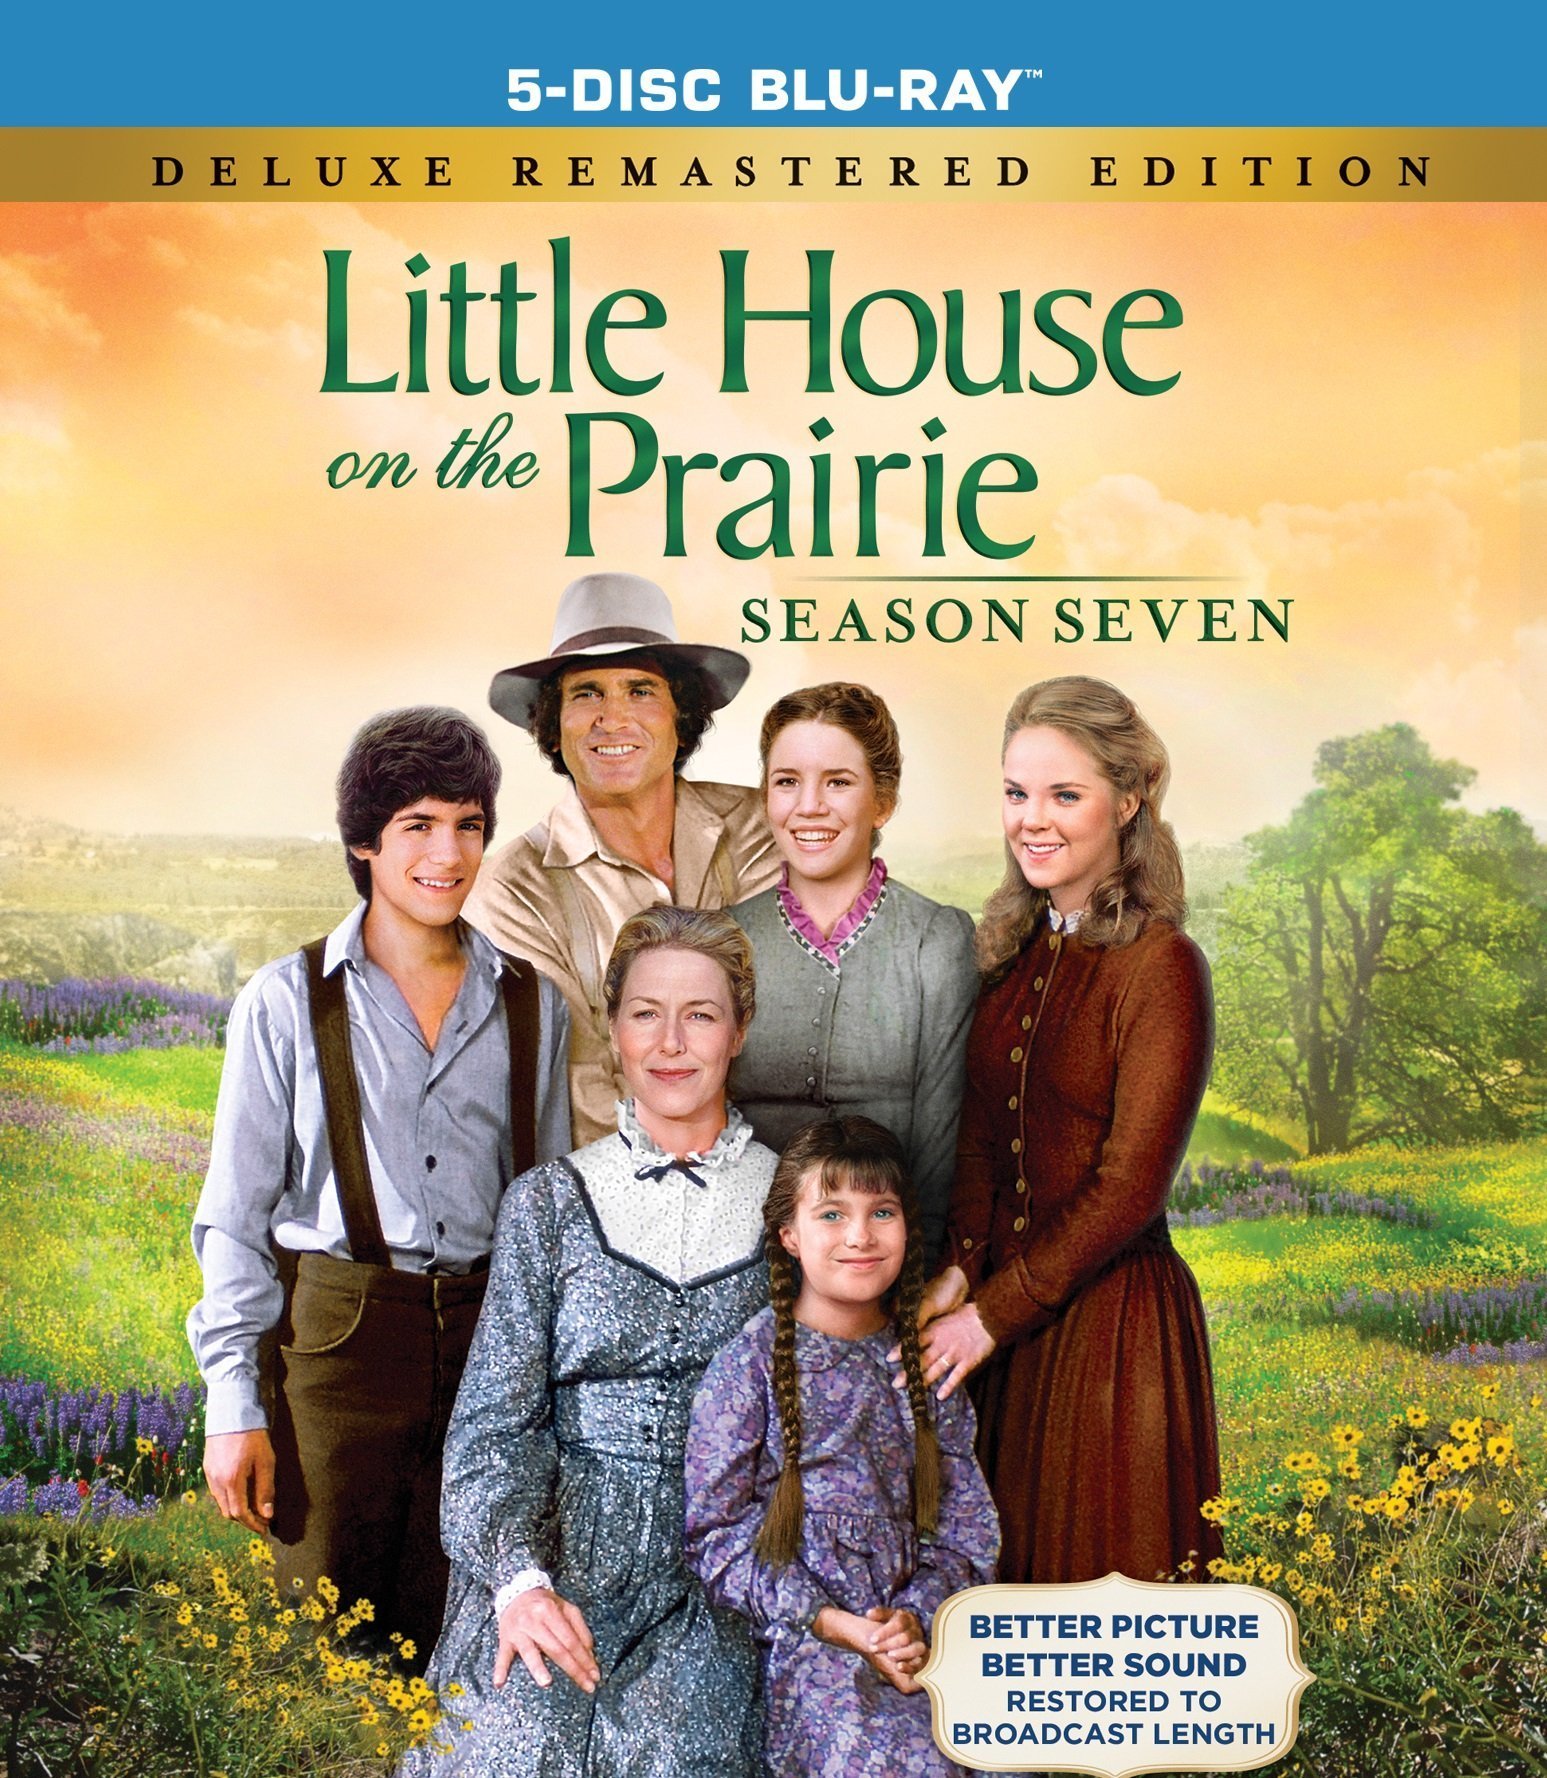 Little House on the Prairie: Season Seven Blu-ray